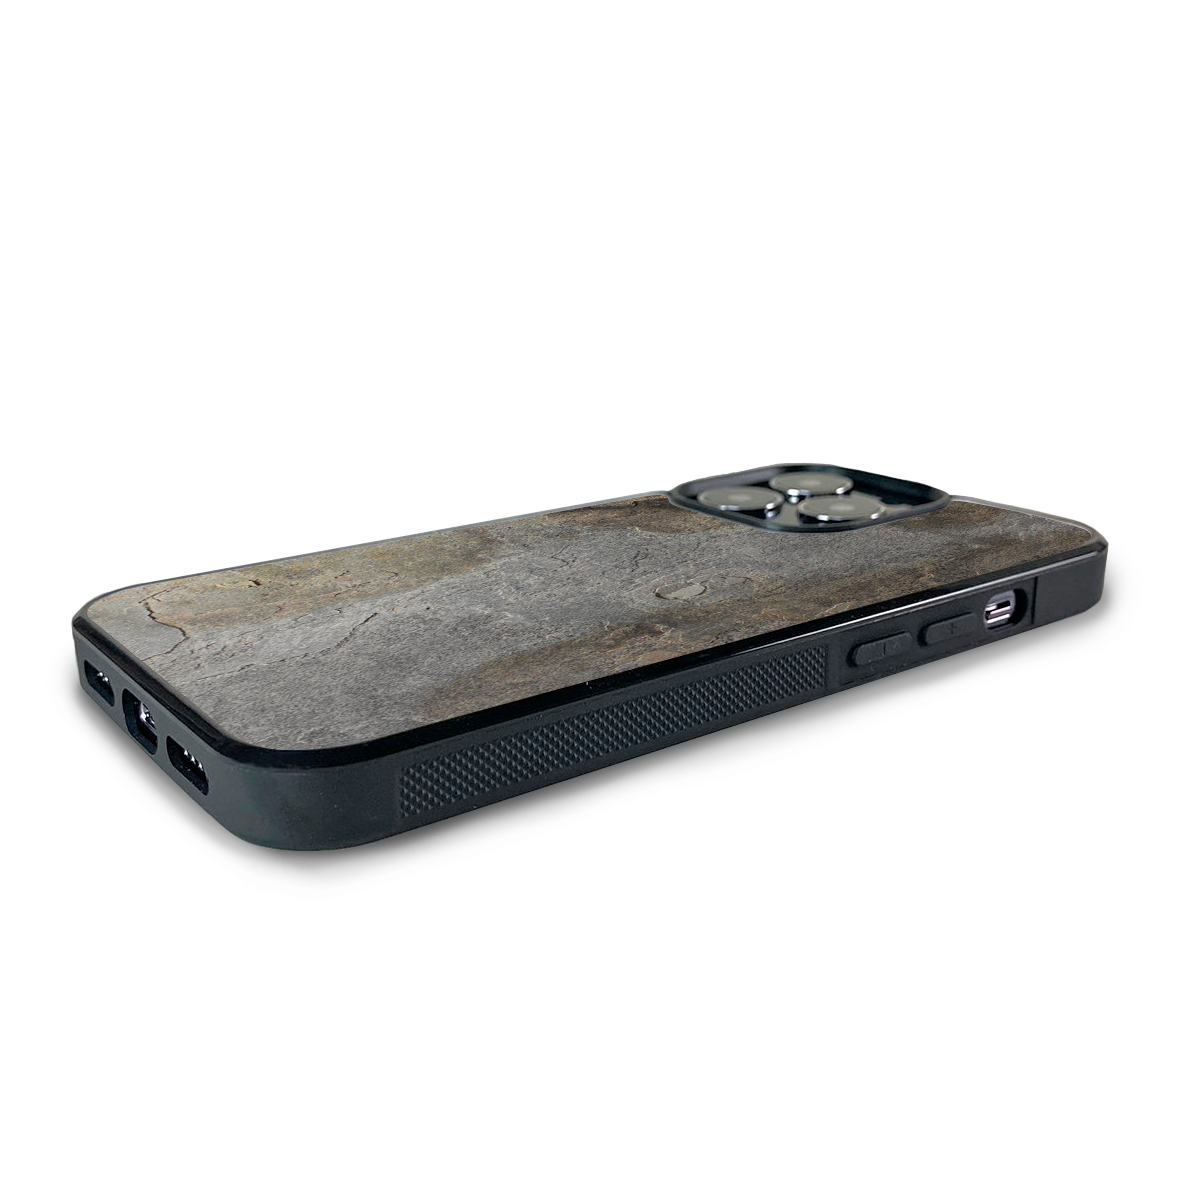 iPhone 15 Pro —  Stone Explorer Case